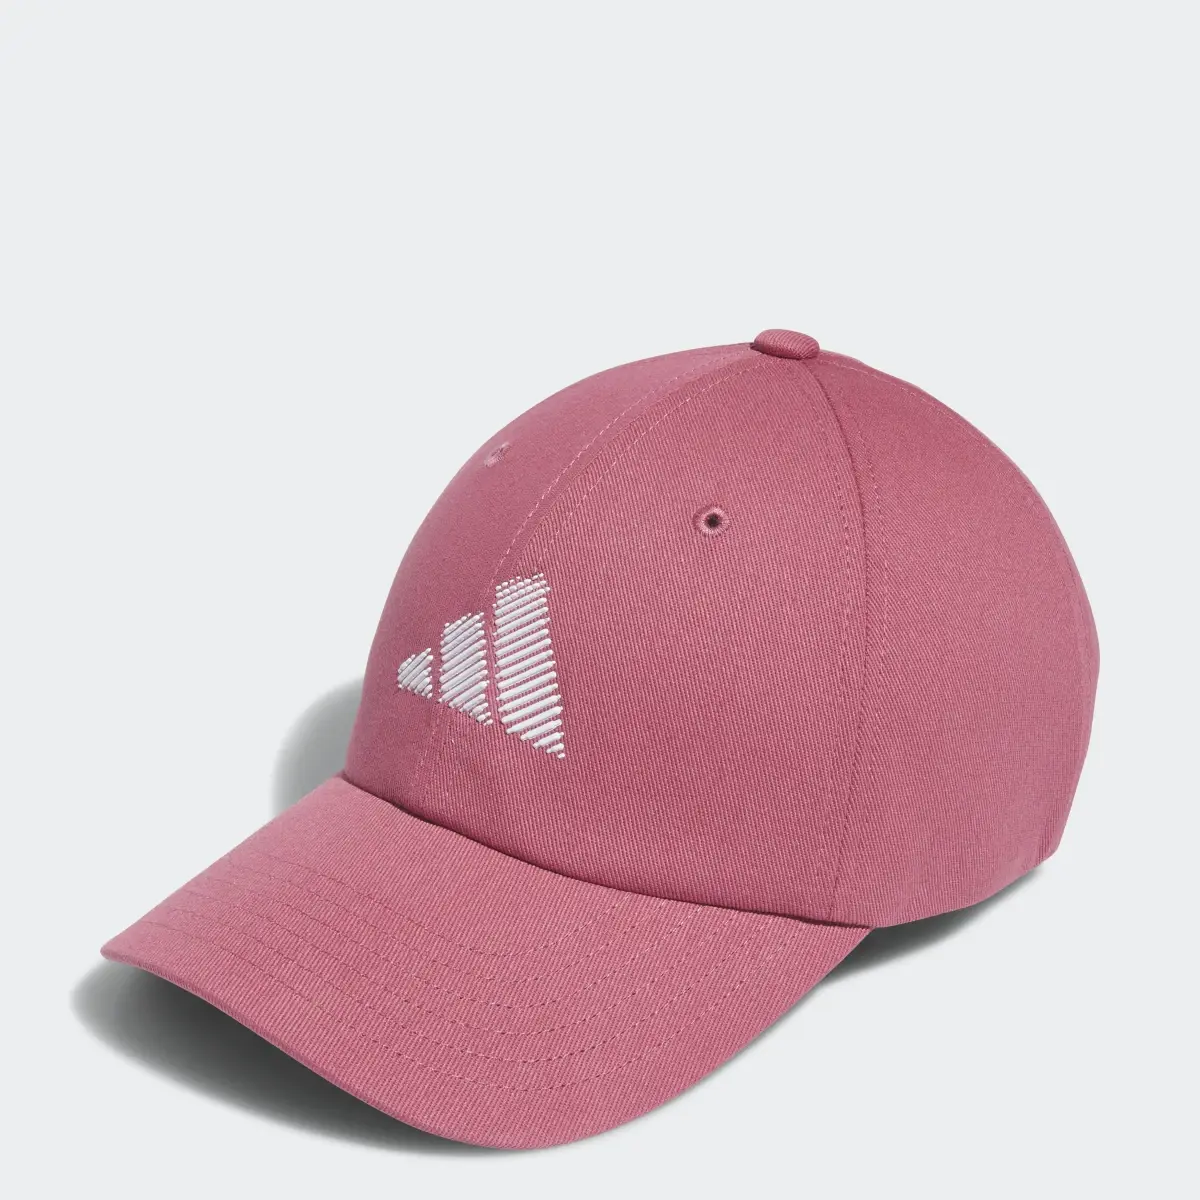 Adidas Criscross Golf Hat. 1